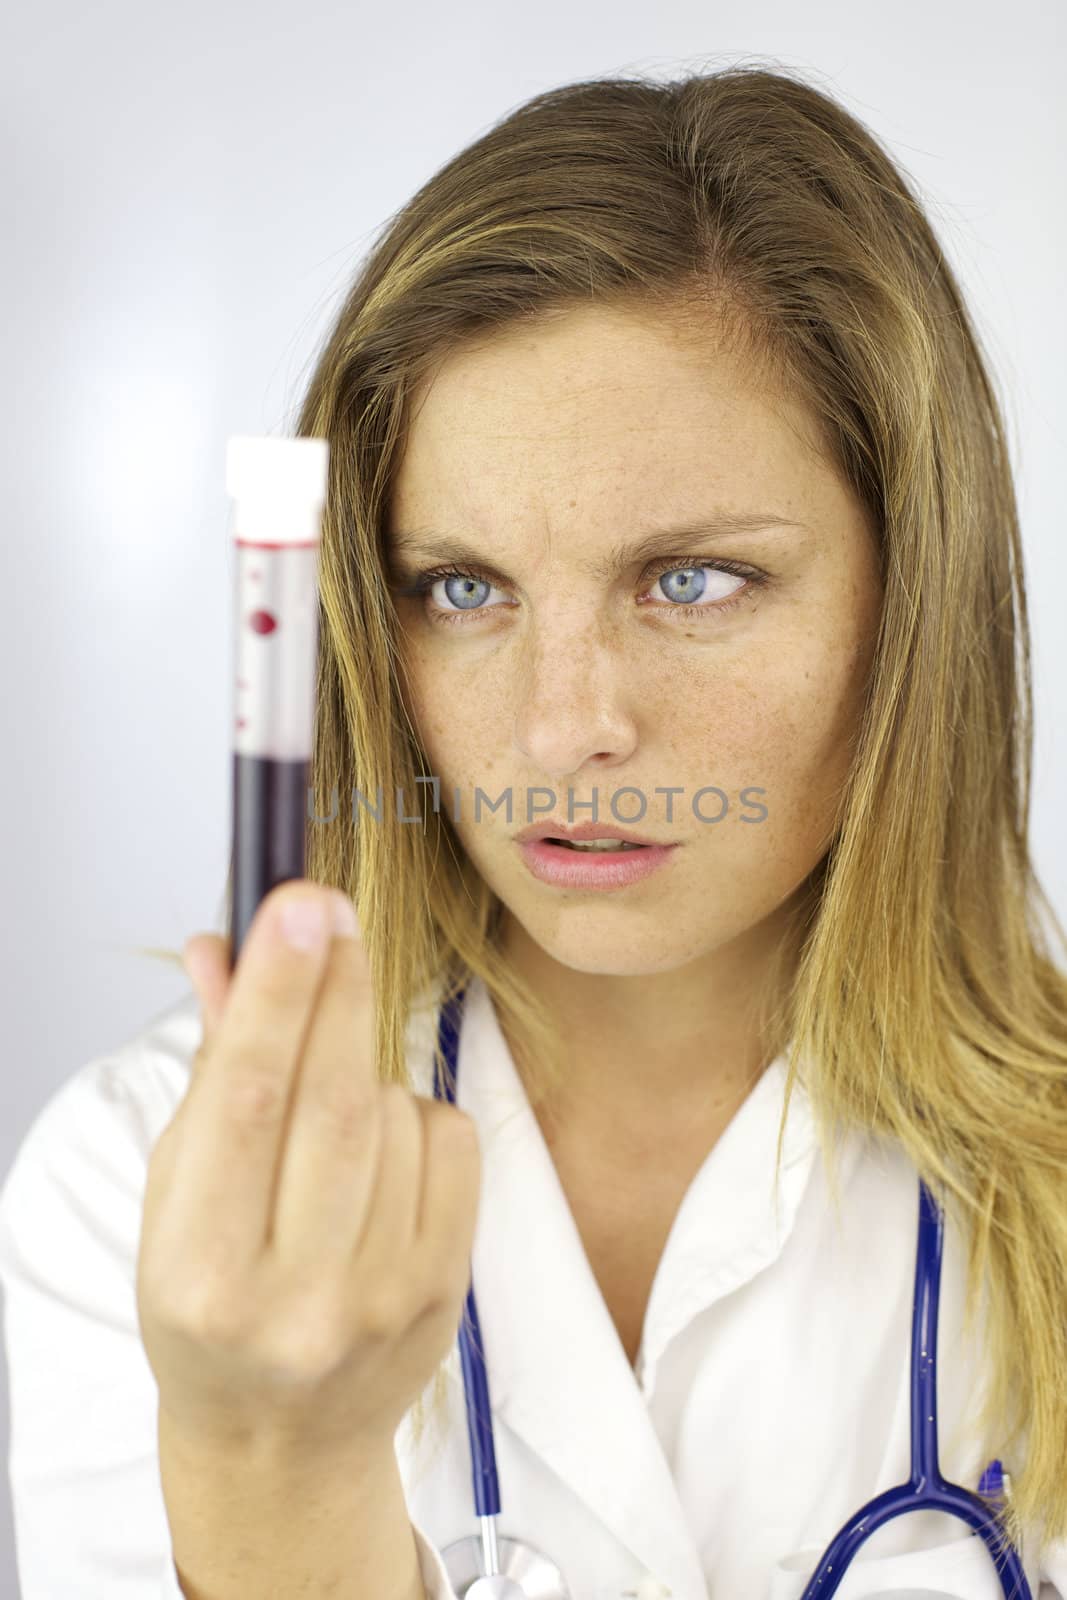 Doctor looking blood sample by fmarsicano